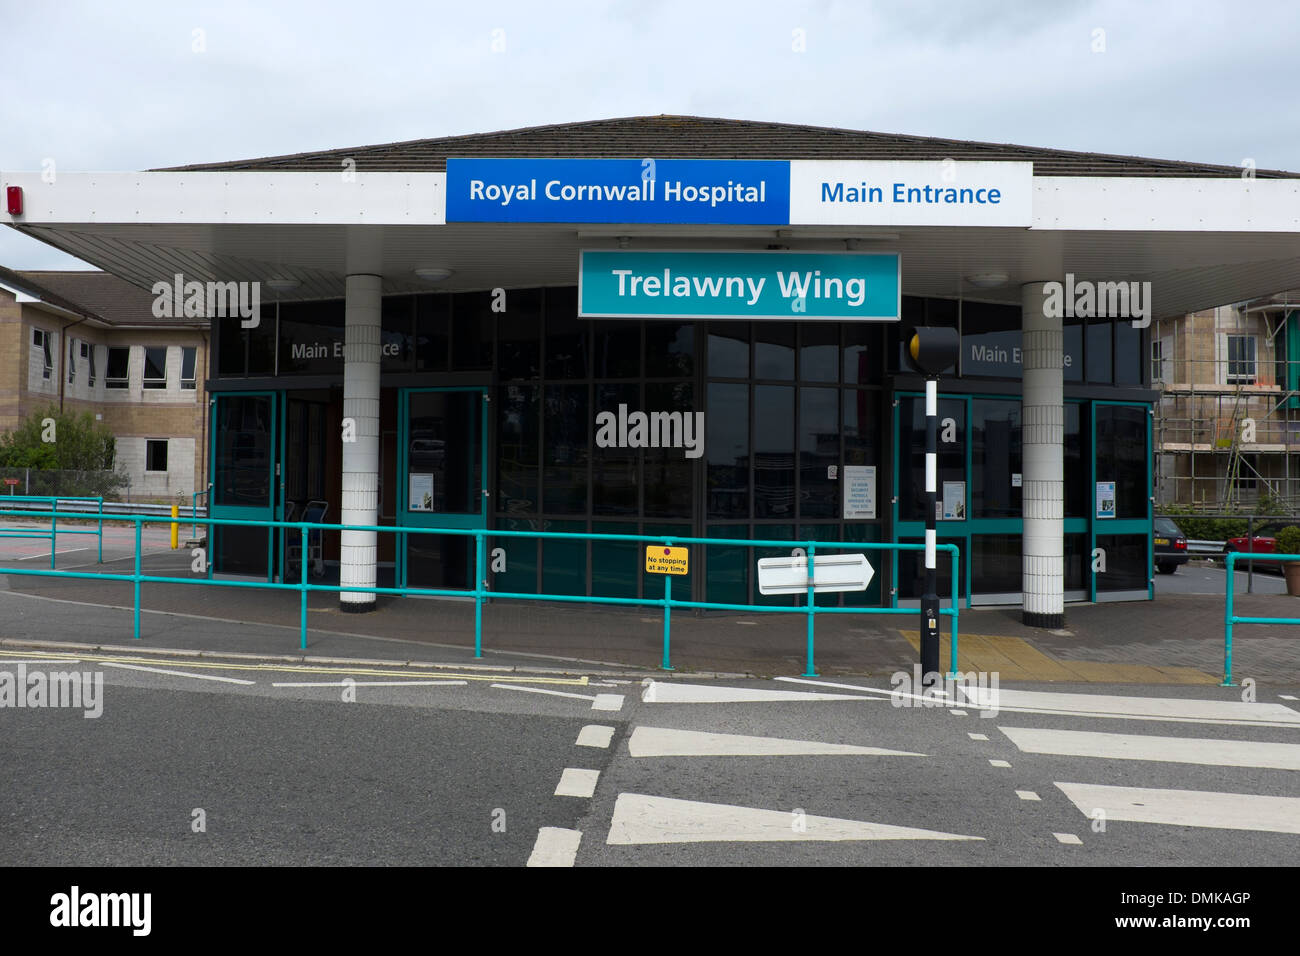 Royal Cornwall Hospital Entrance Sign Trelawny Wing Stock Photo